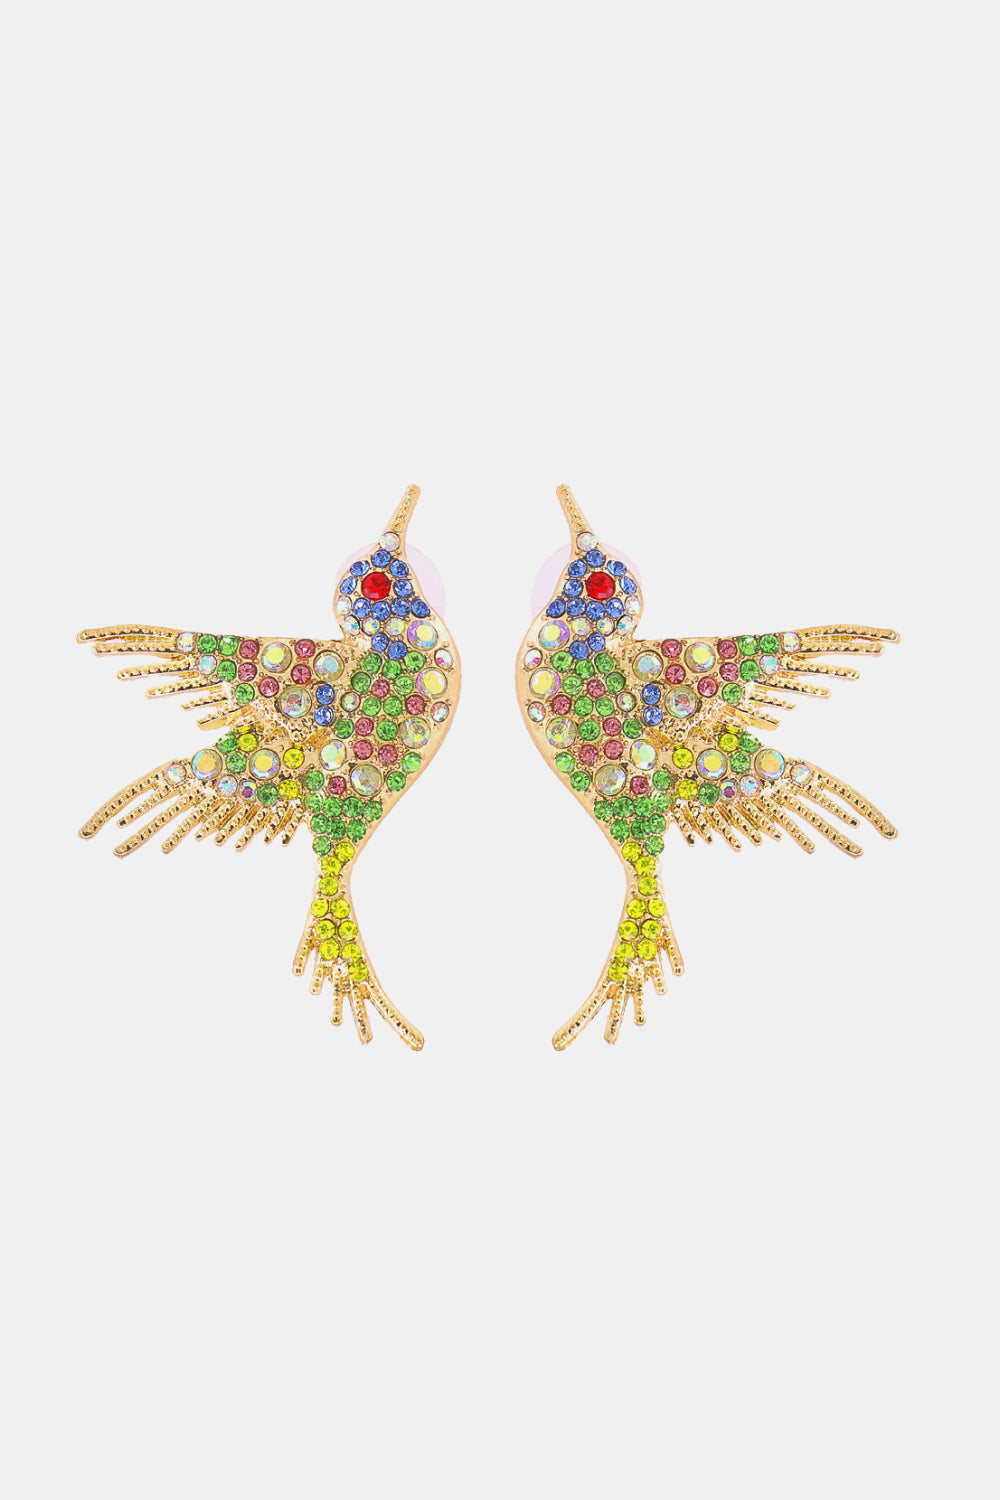 Glass Hummingbird Post Earrings, Large 1.4